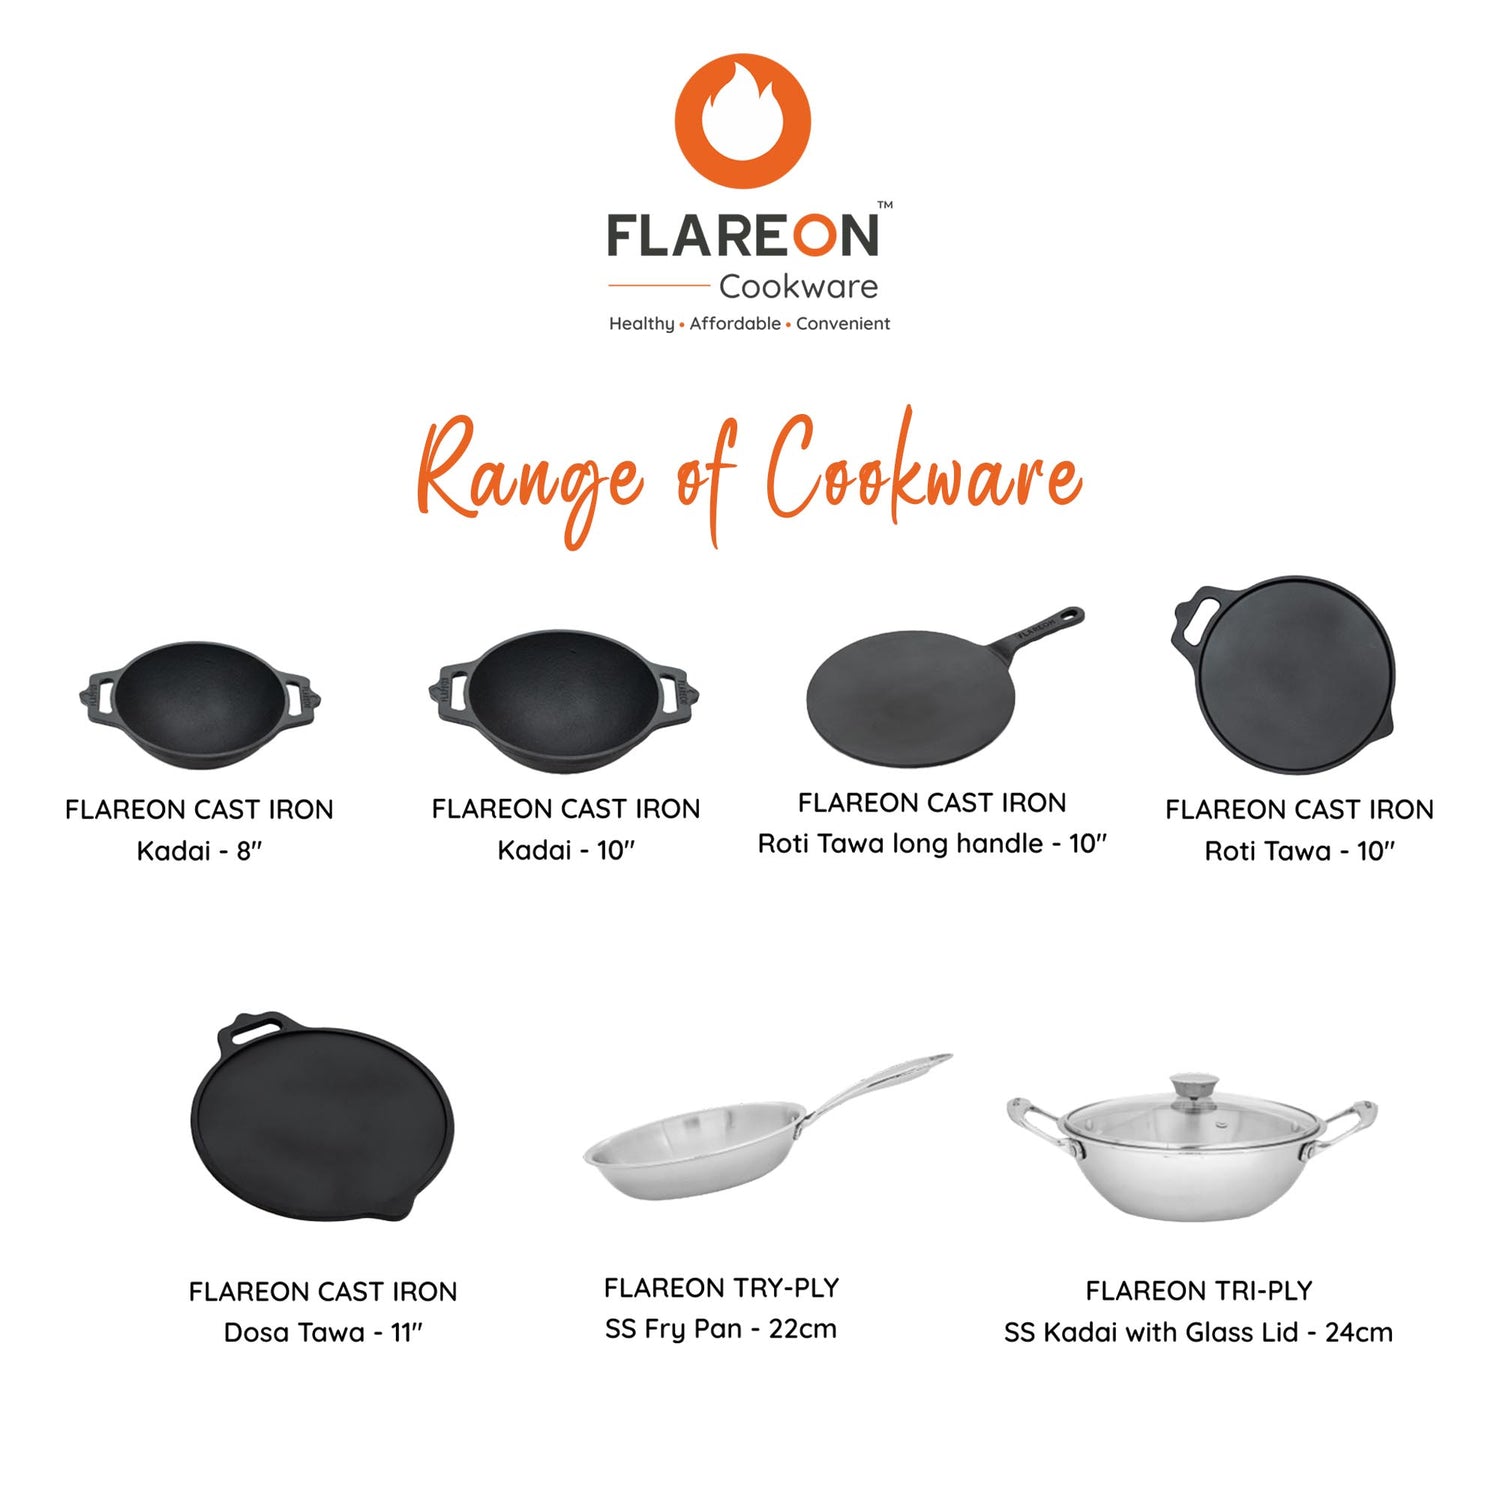 FlareOn's Cast Iron Kadai 8-Inch- Range of Cookware